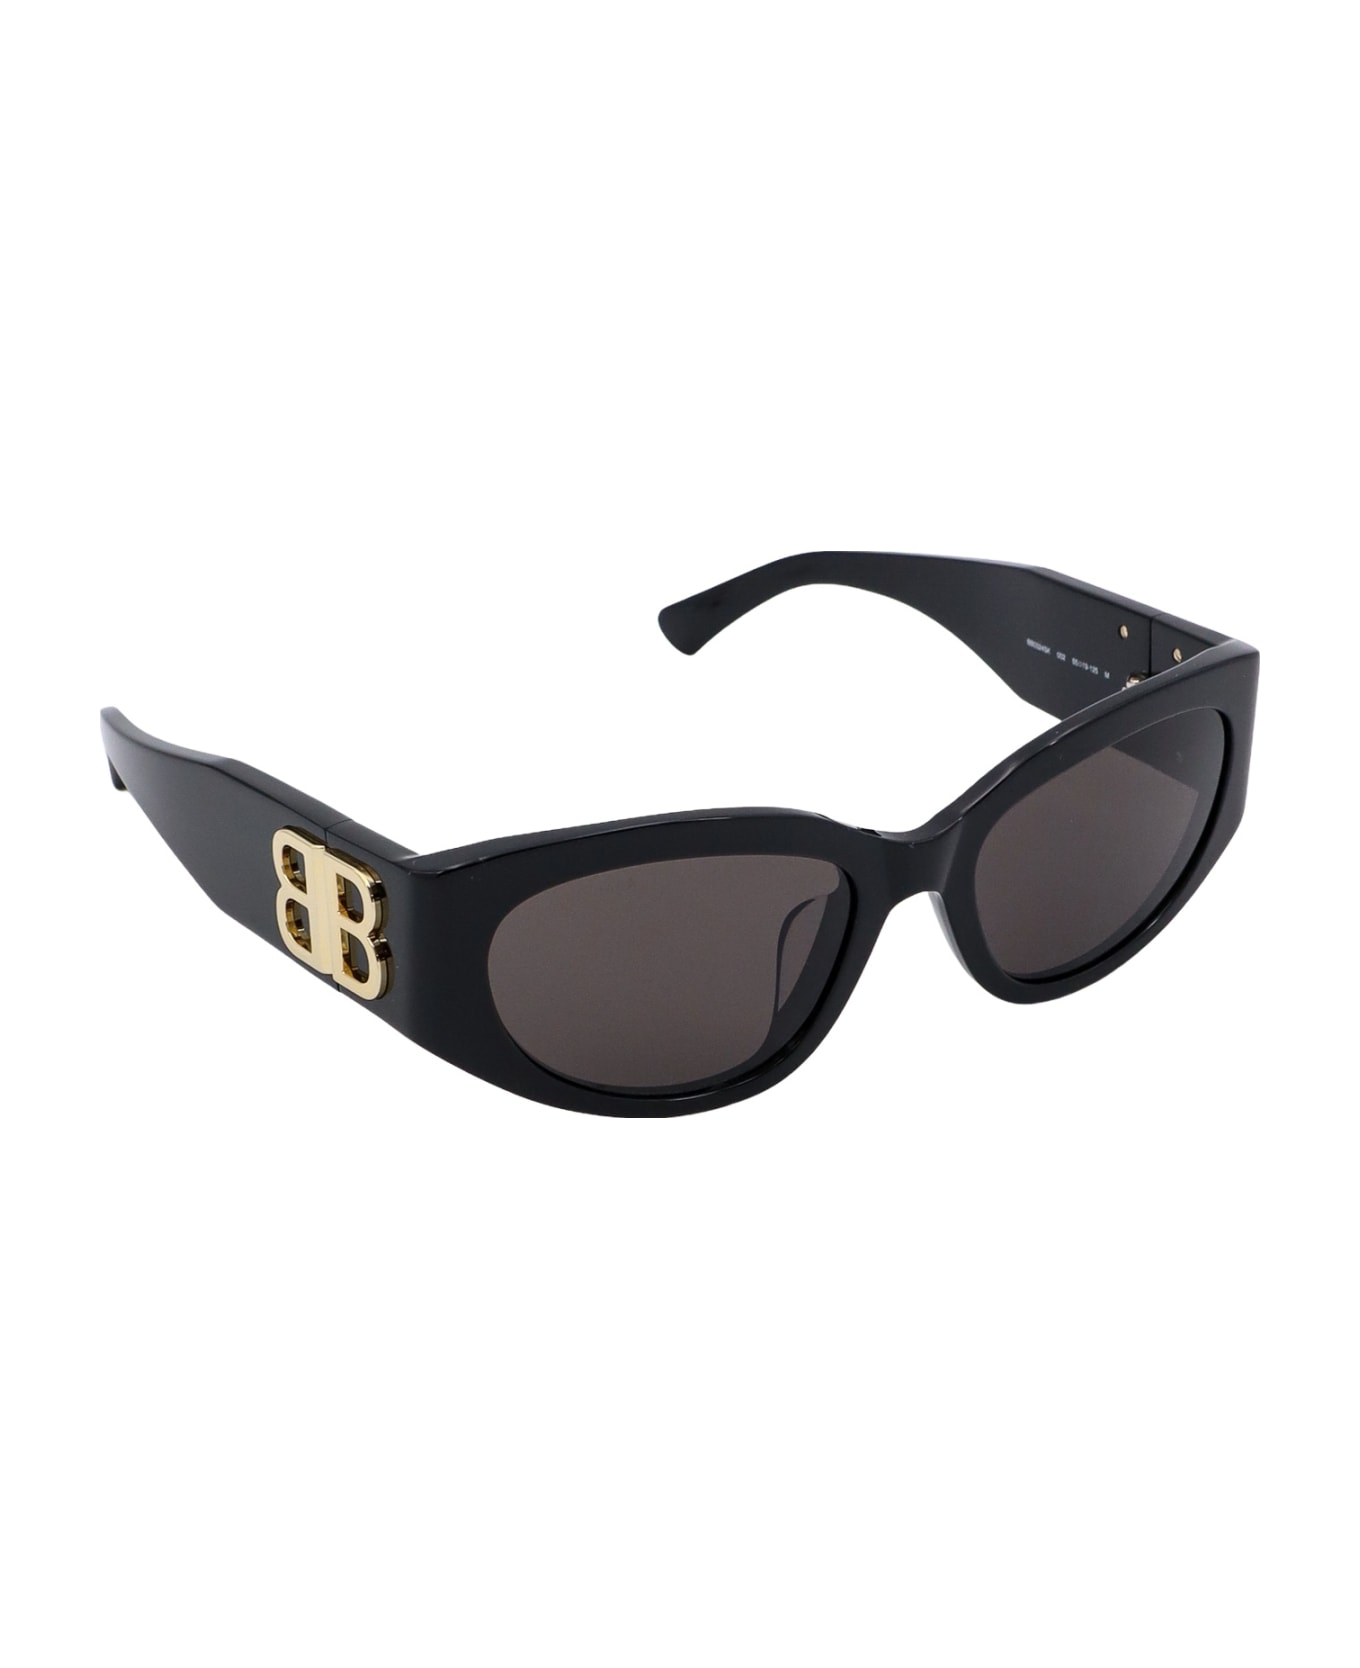 Balenciaga Acetate Sunglasses - Black サングラス